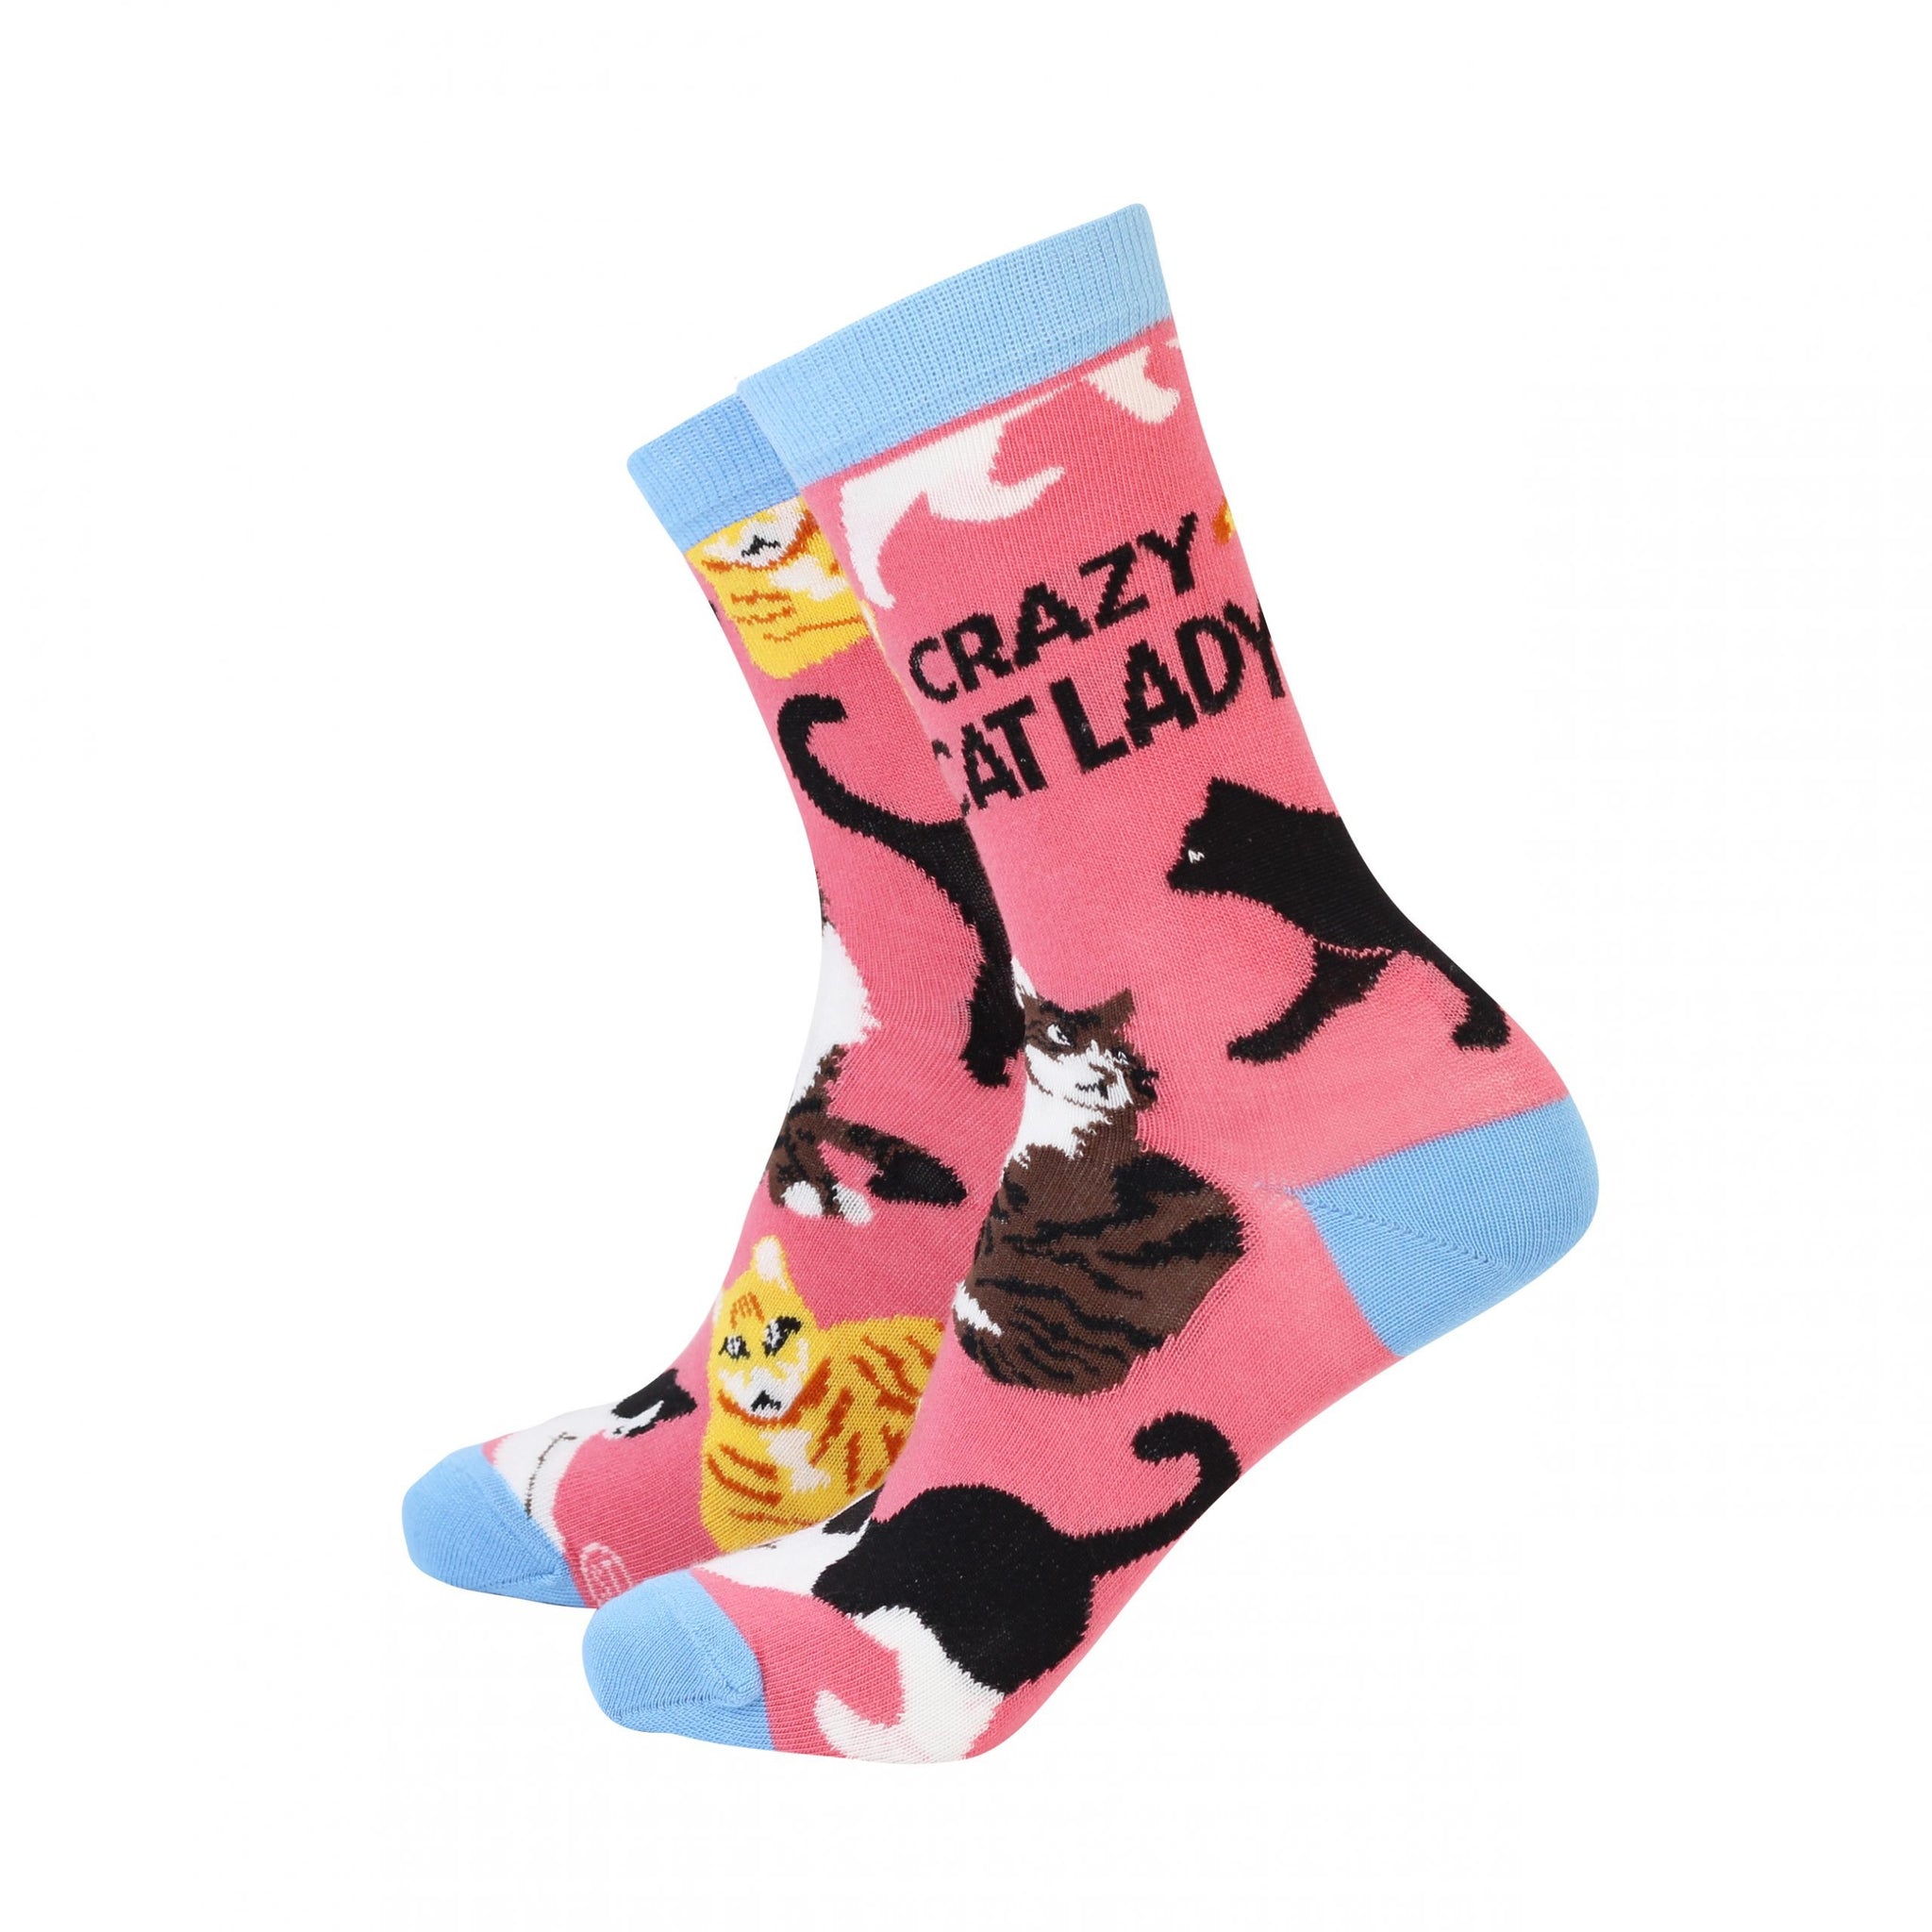 'Crazy Cat Lady' Women's Socks